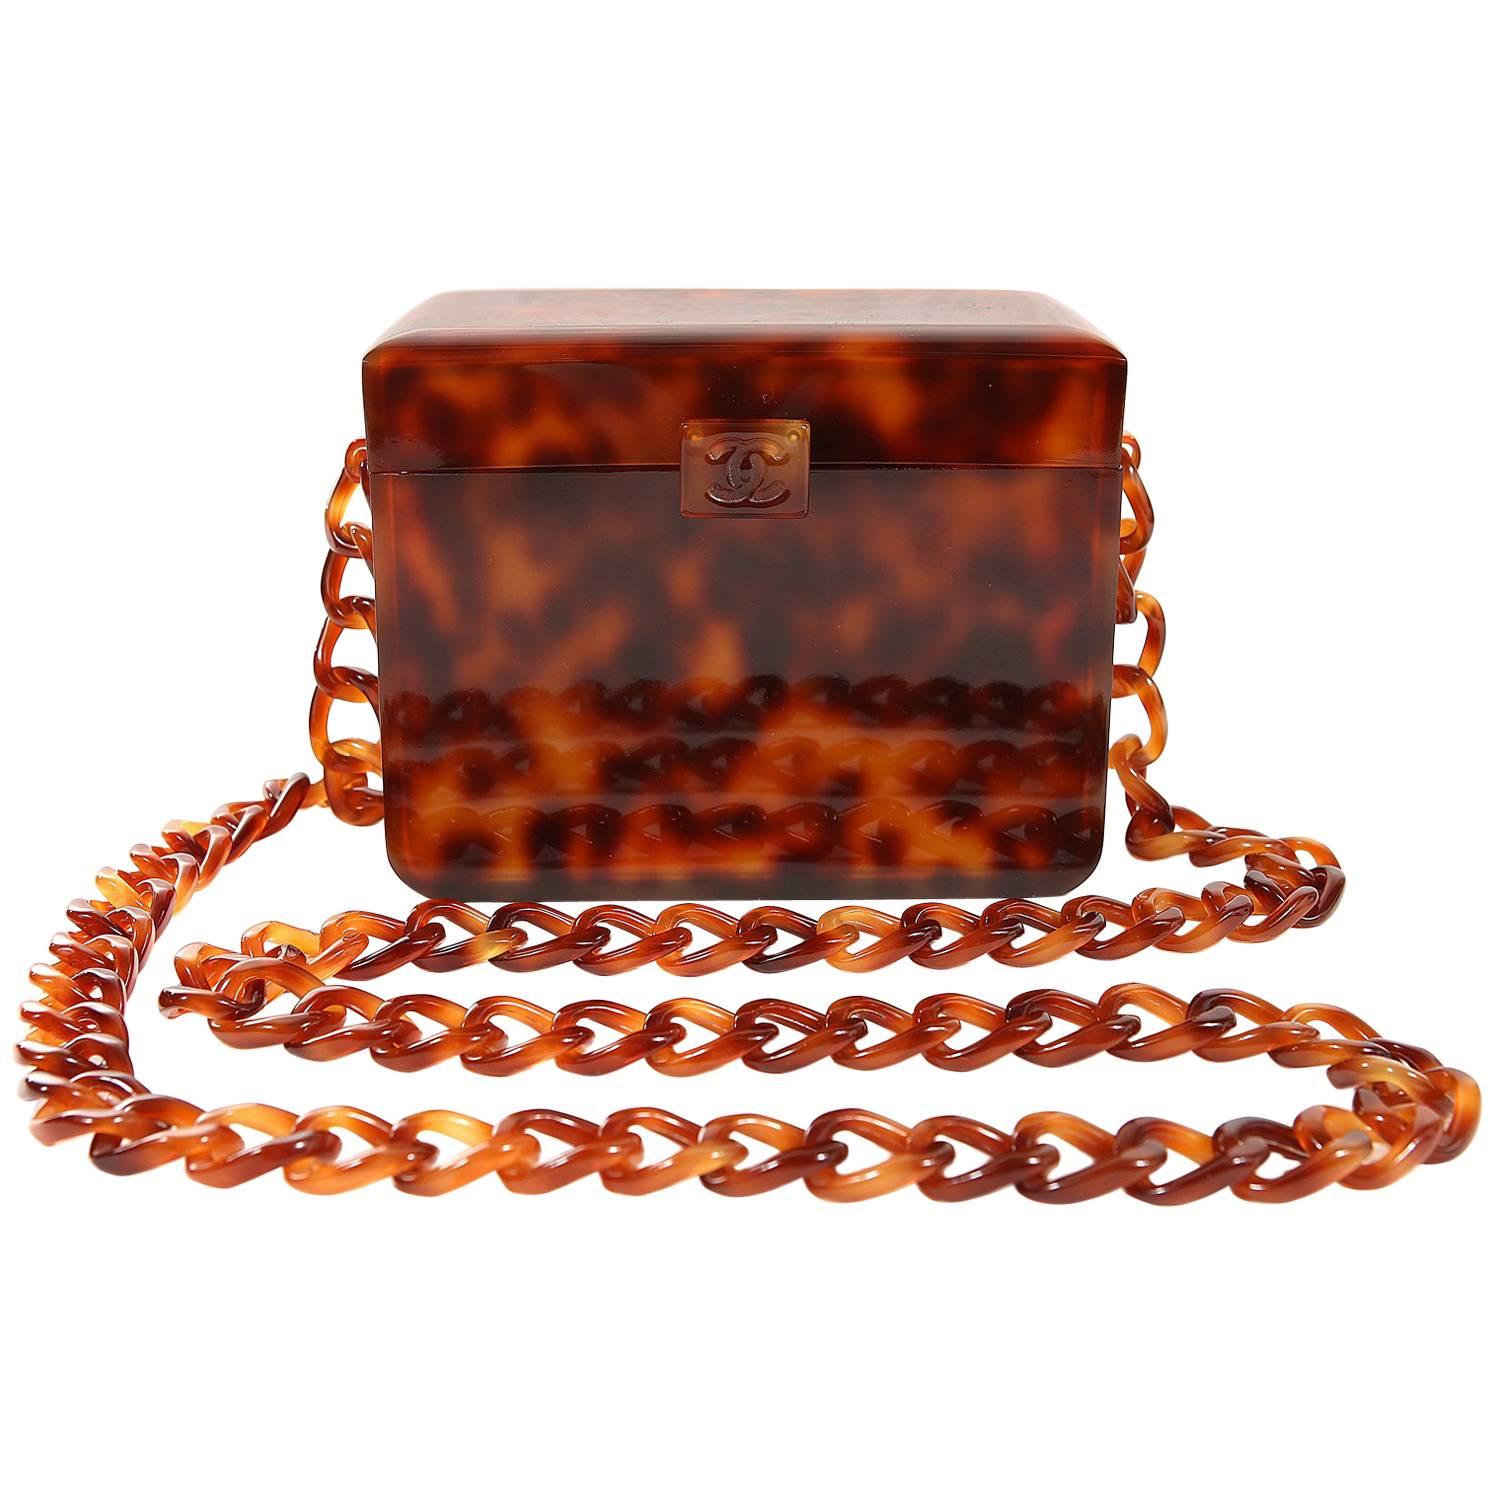 Chanel Tortoise Pattern Resin Chain Bag